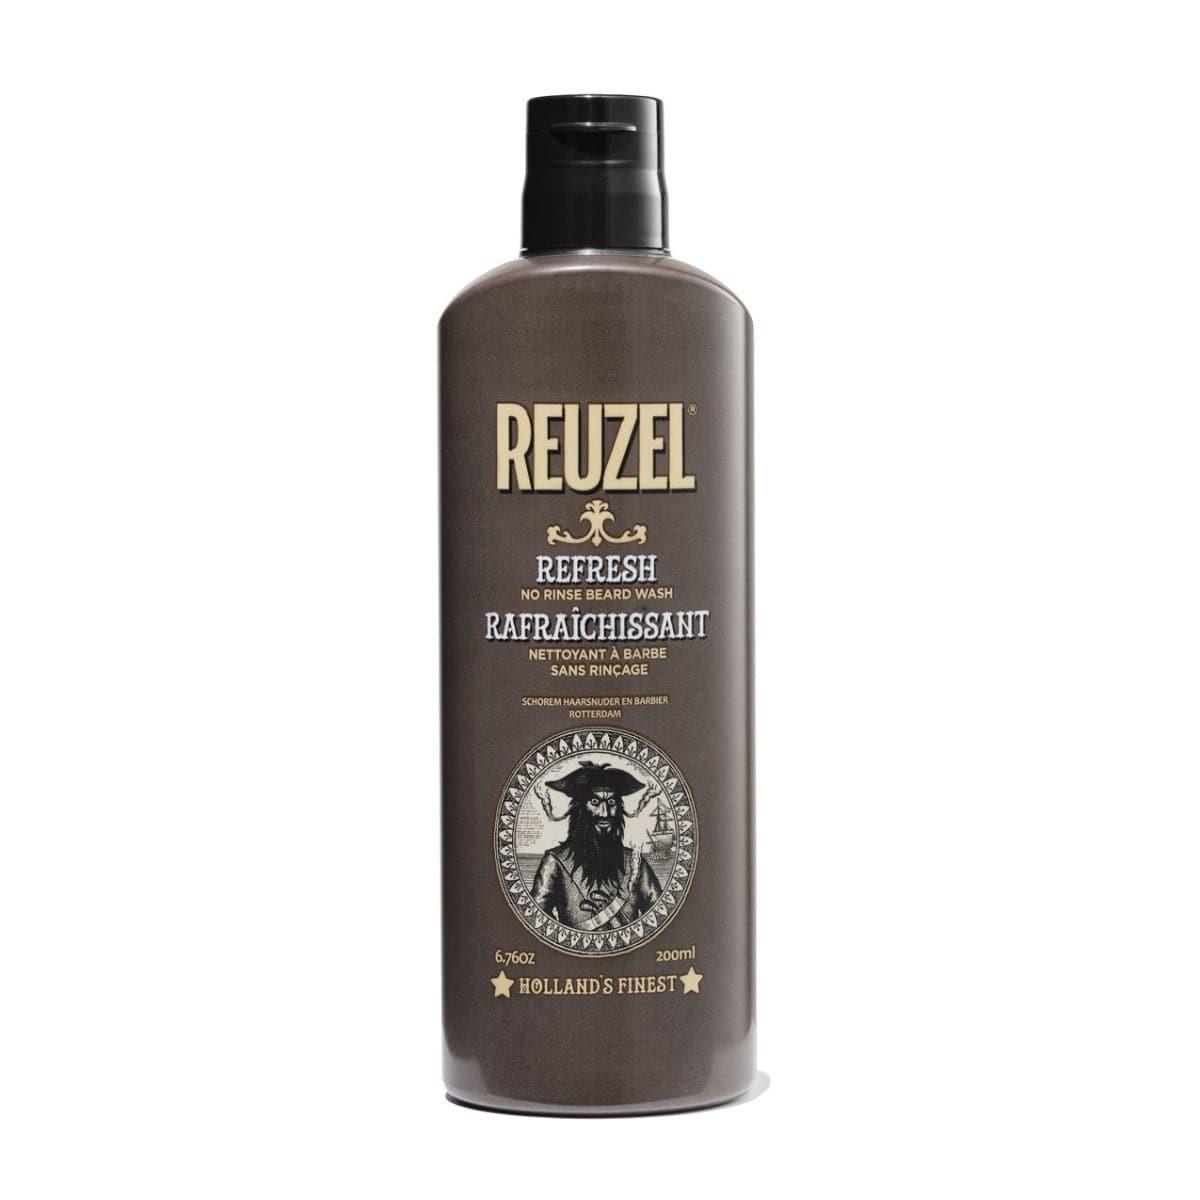 Reuzel Refresh No Rinse Beard Wash (200ml)